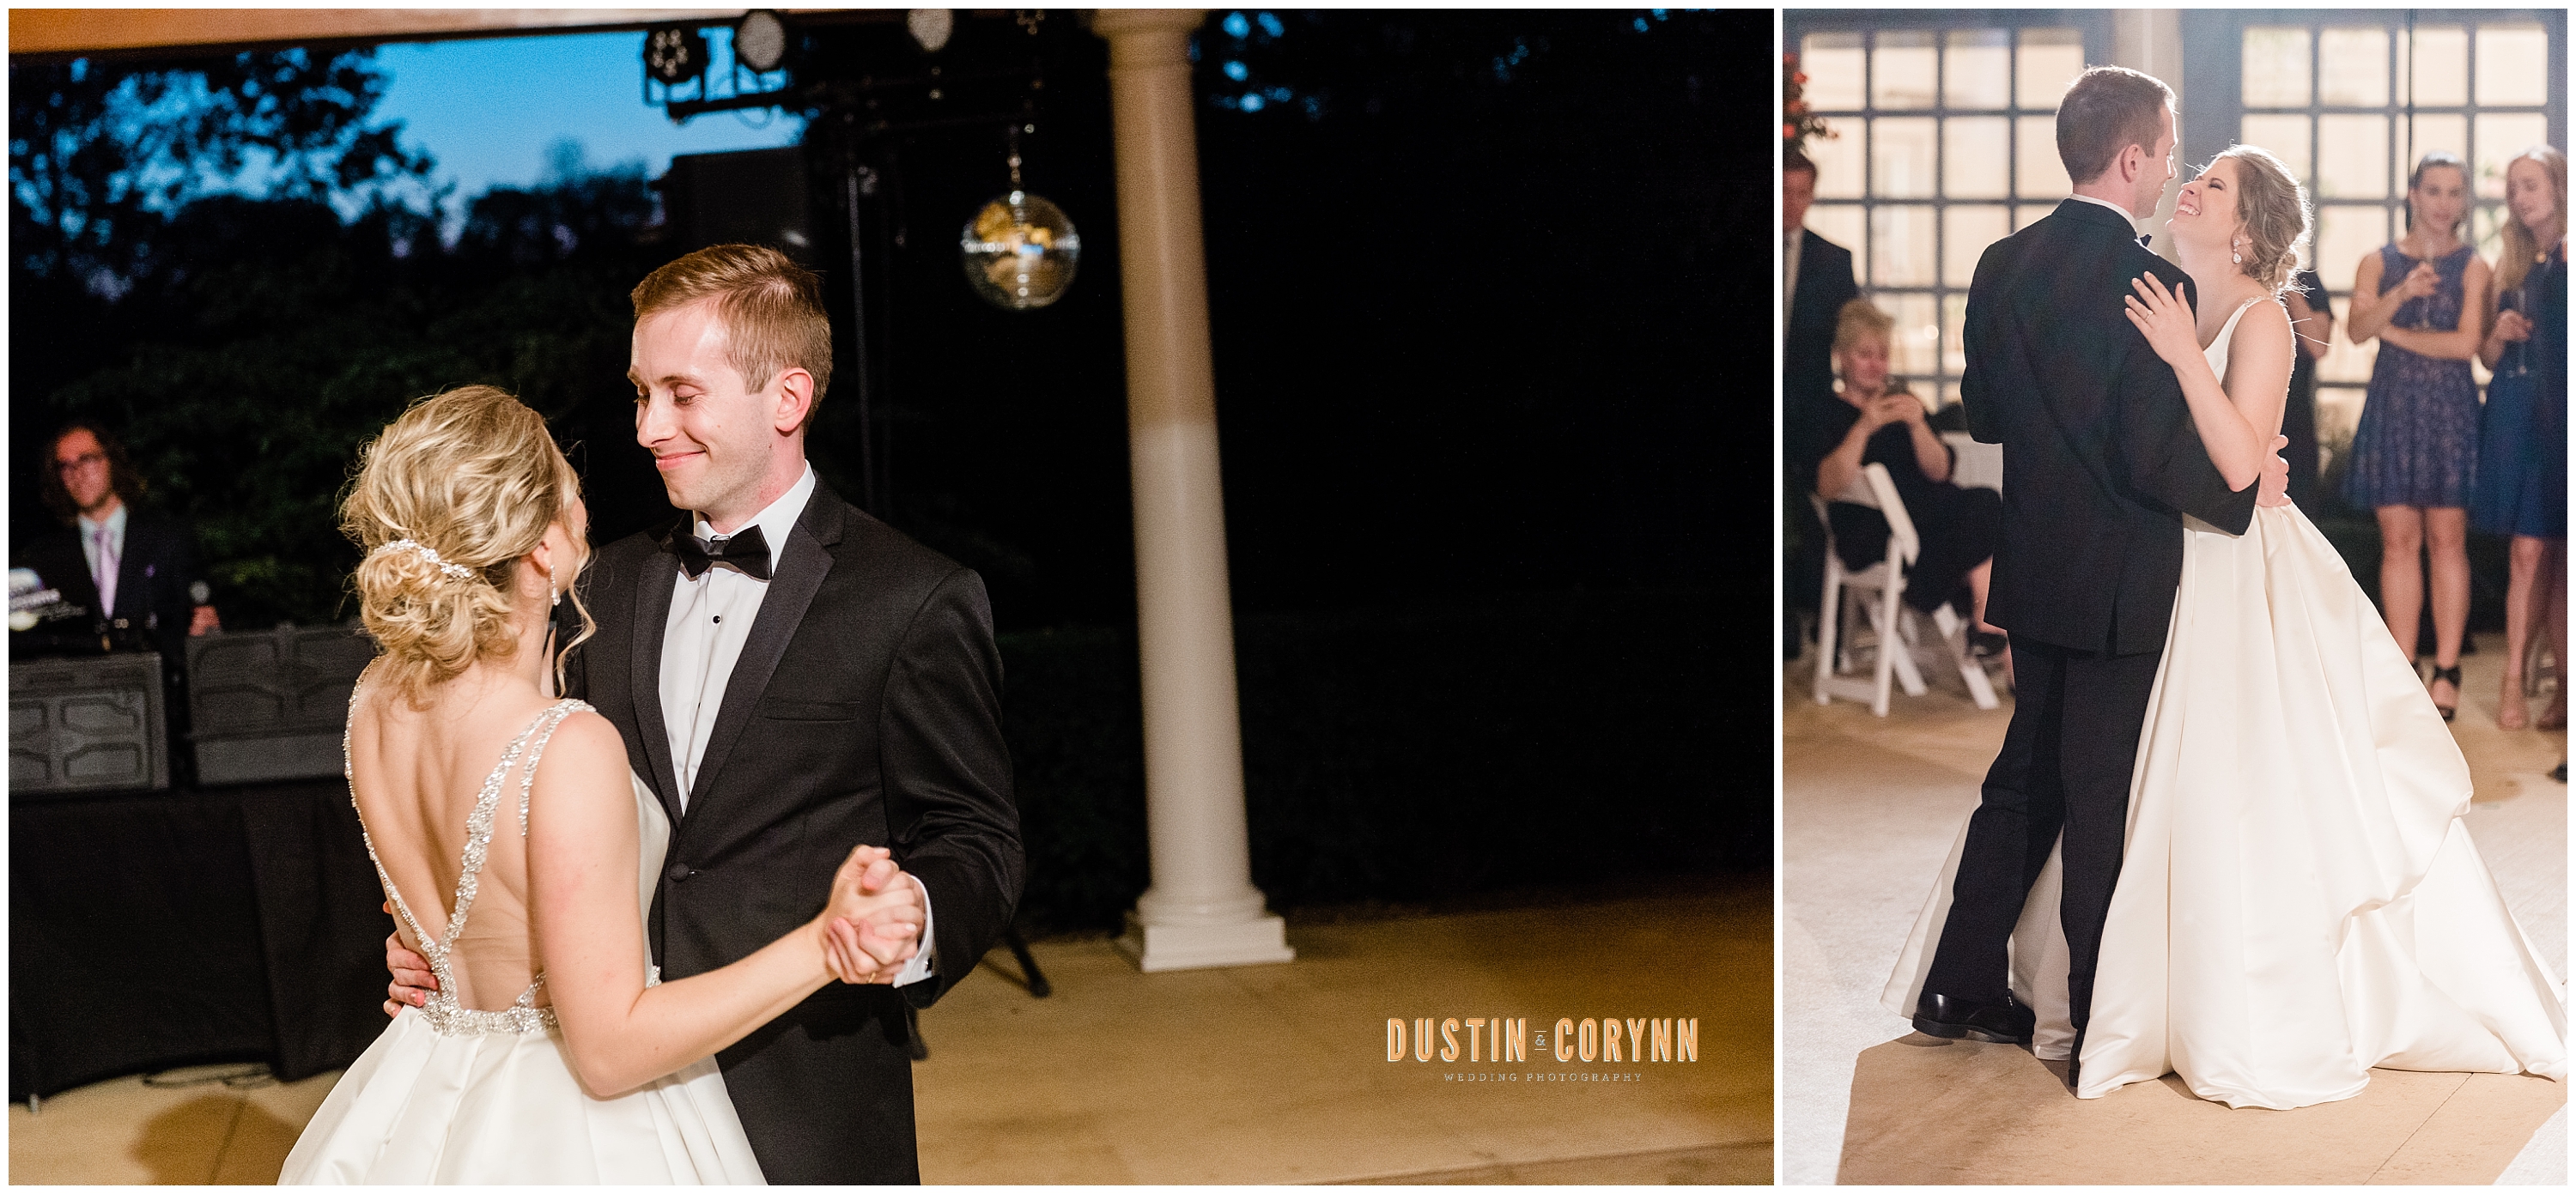 Fort Wayne wedding photographer captures first dance at Sycamore Hills Golf Club 